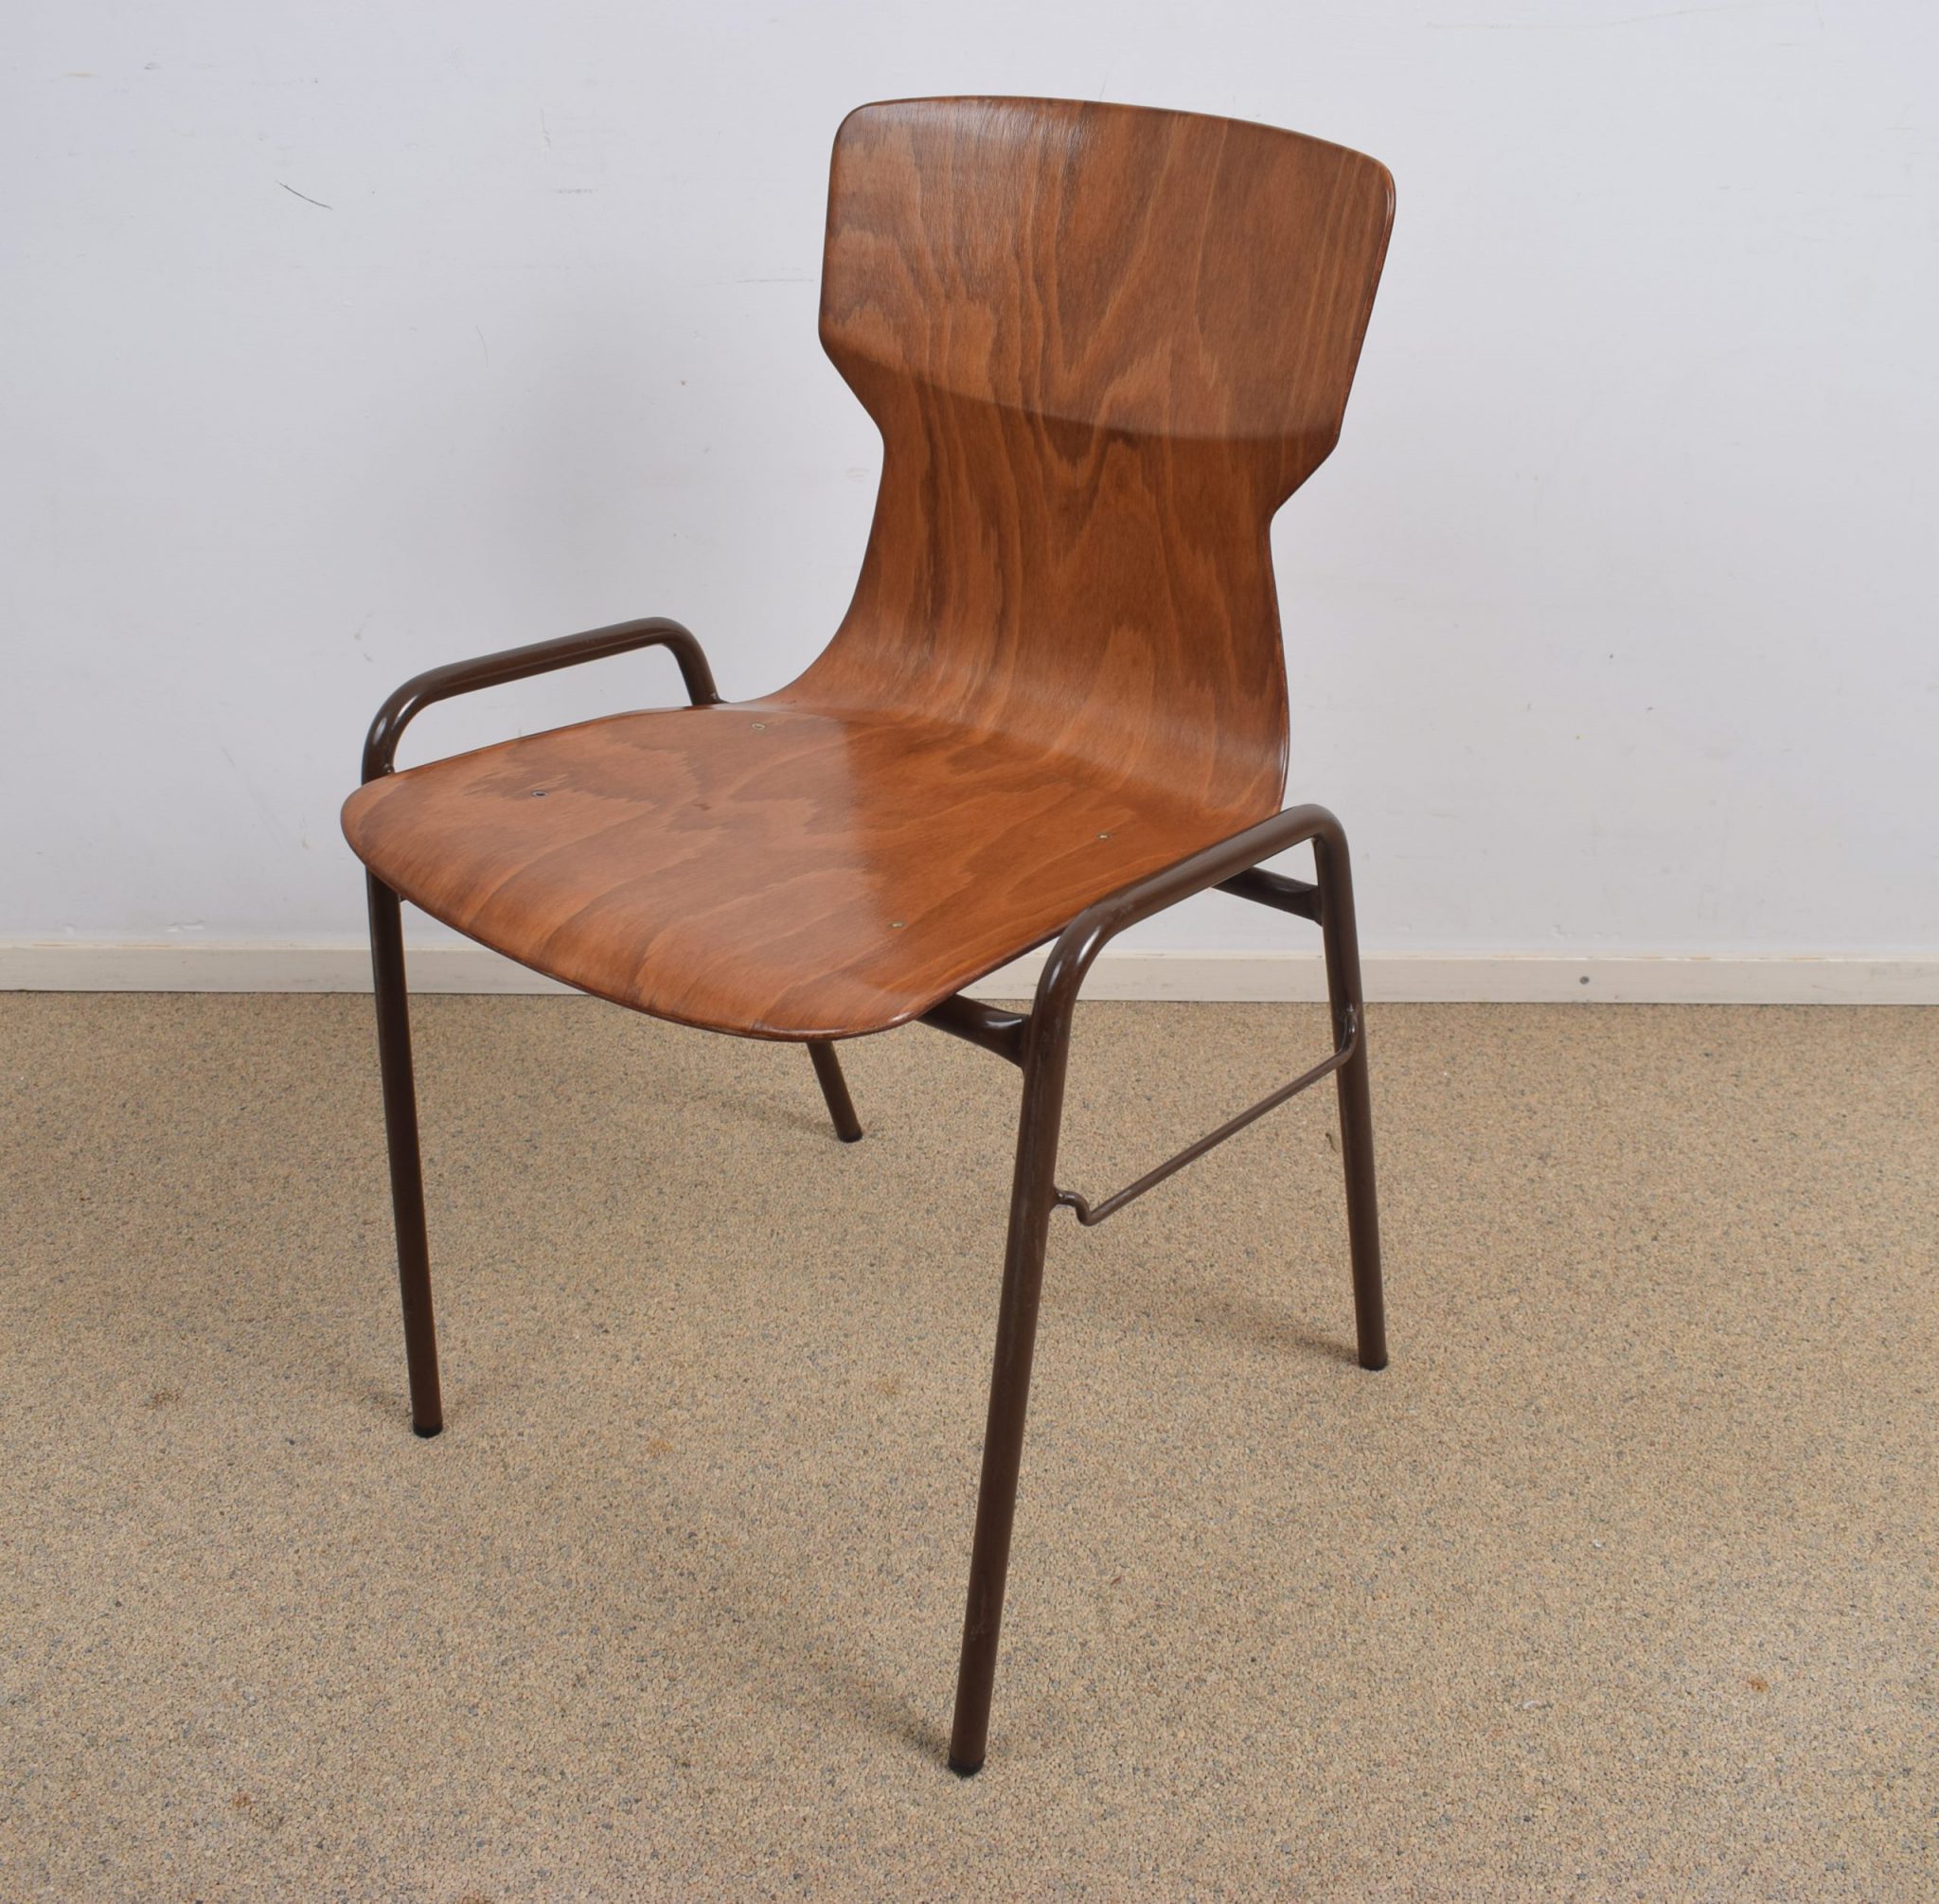 10x Brown industrial school chair by Eromes | Howaboutout | vintage ...